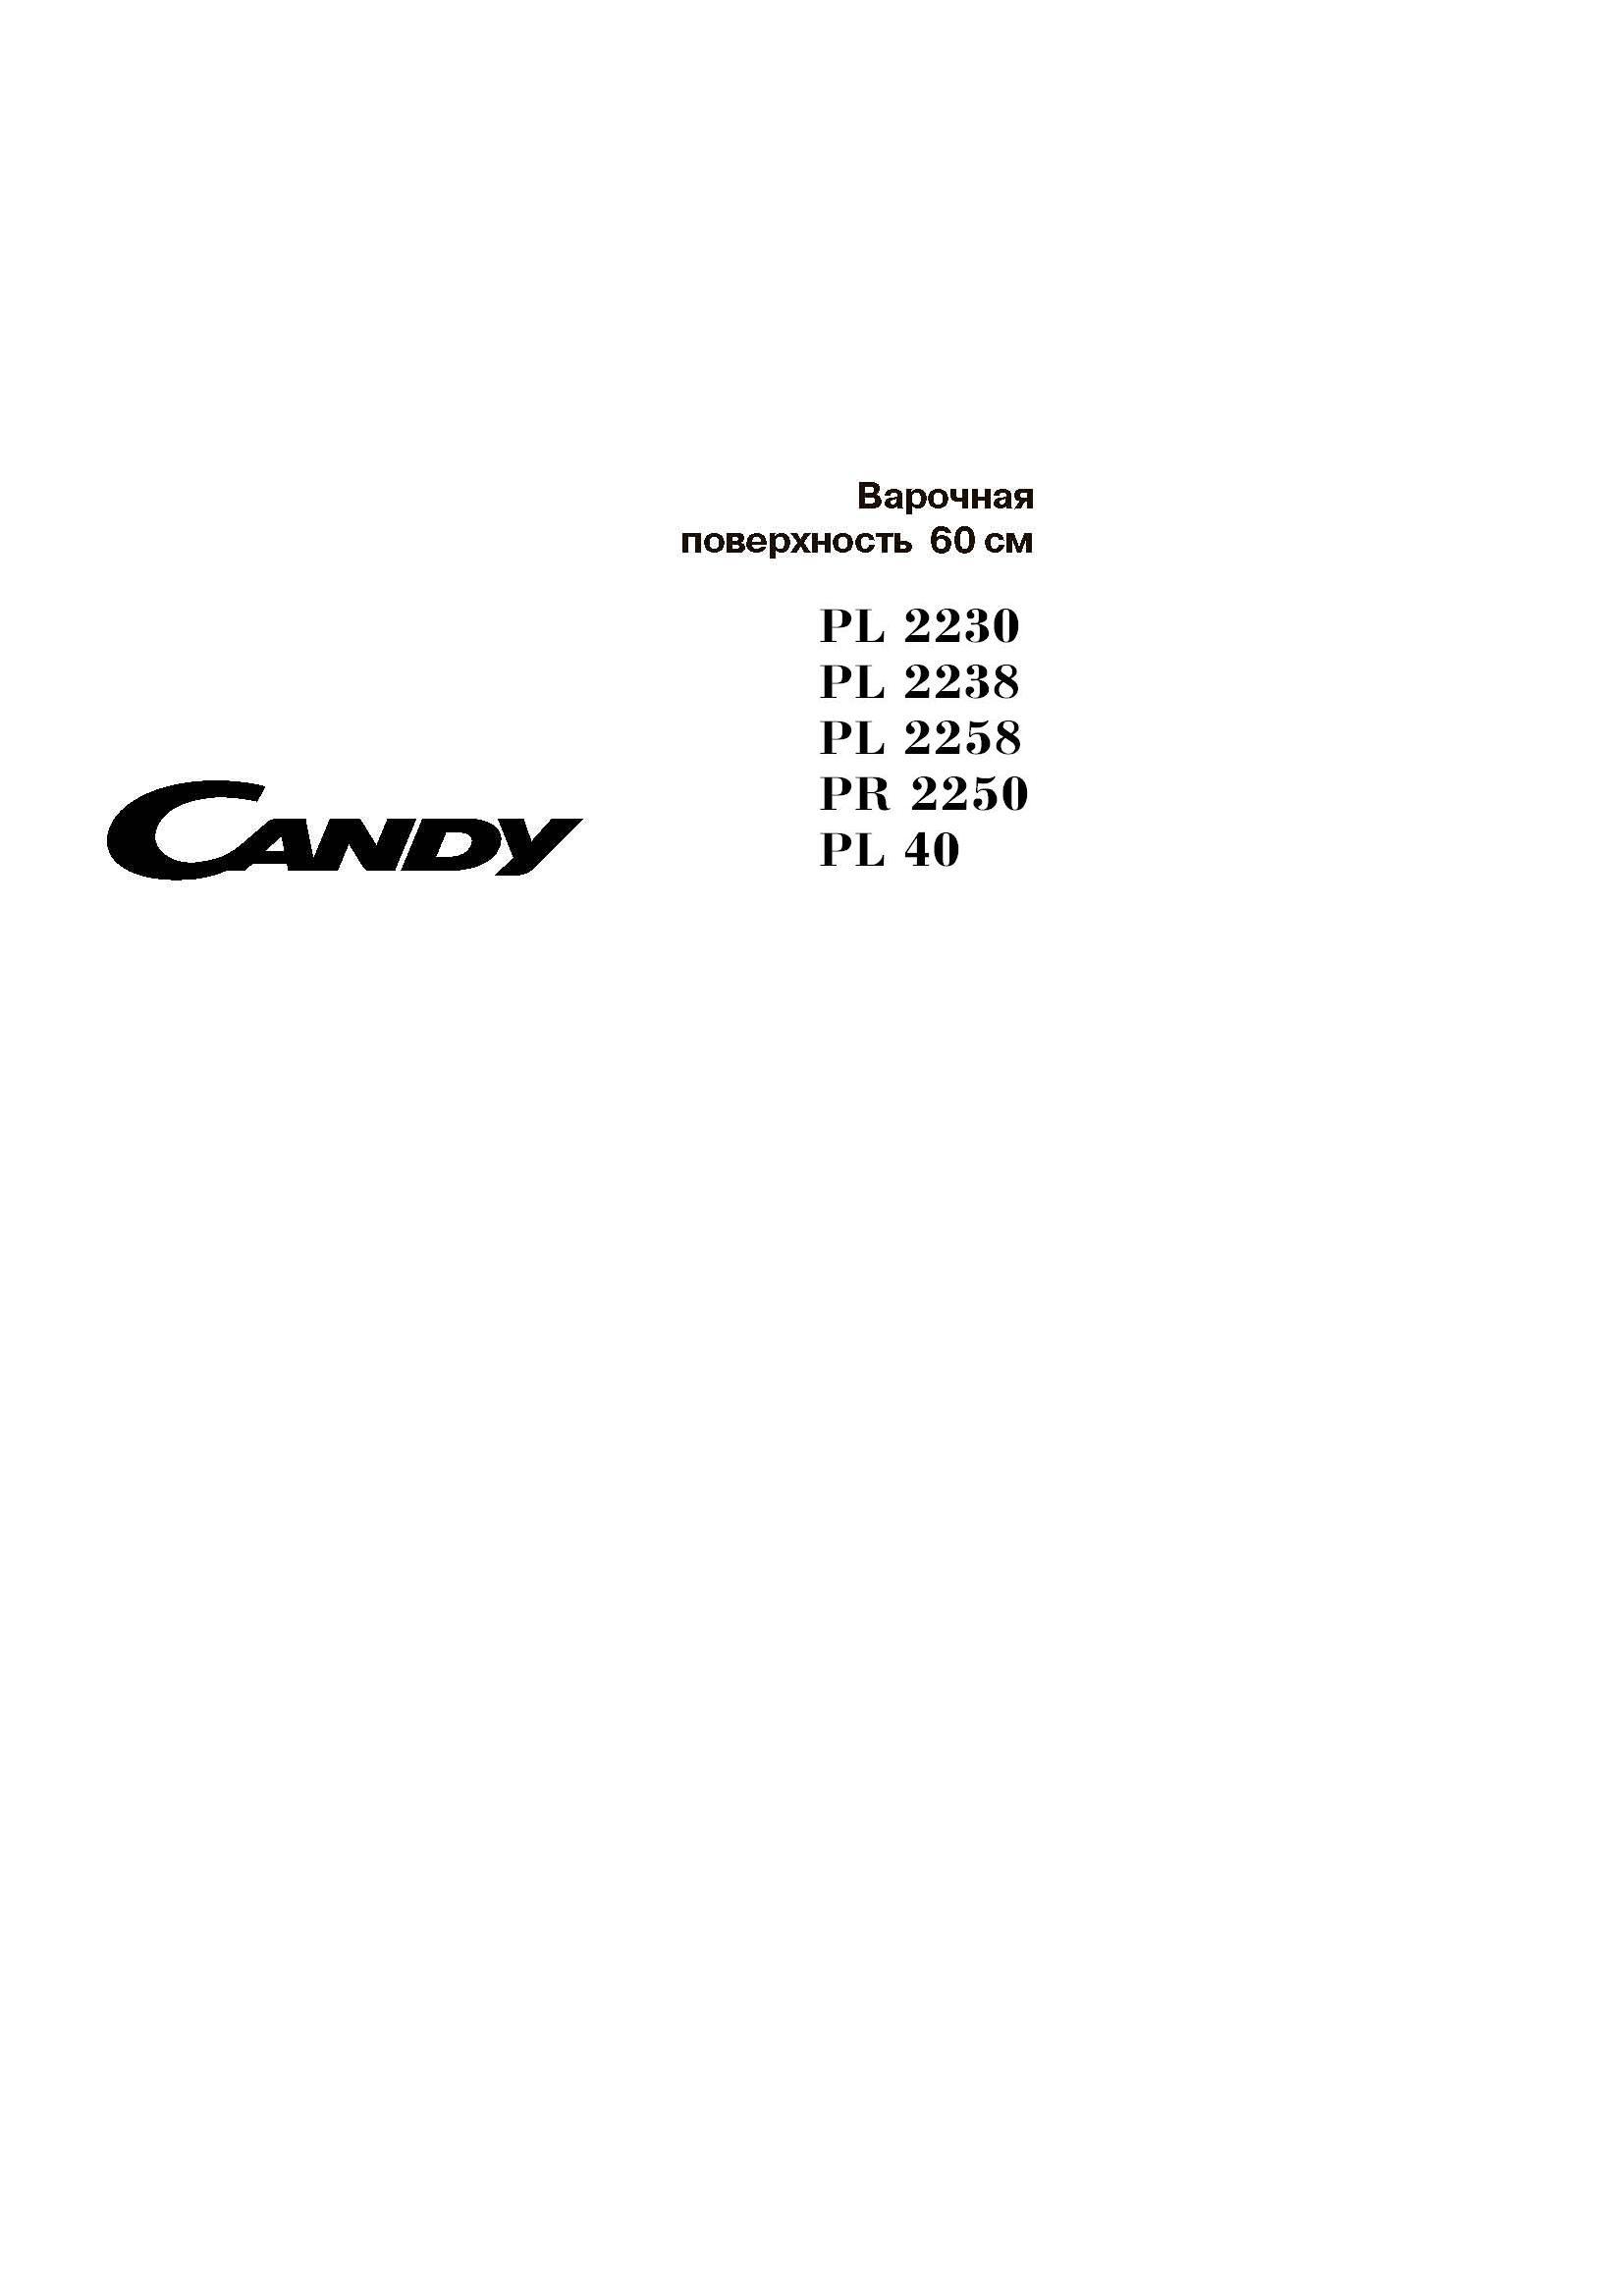 CANDY PR 2250, PL 40, PL 2258, PL 2238, PL 2230 User Manual